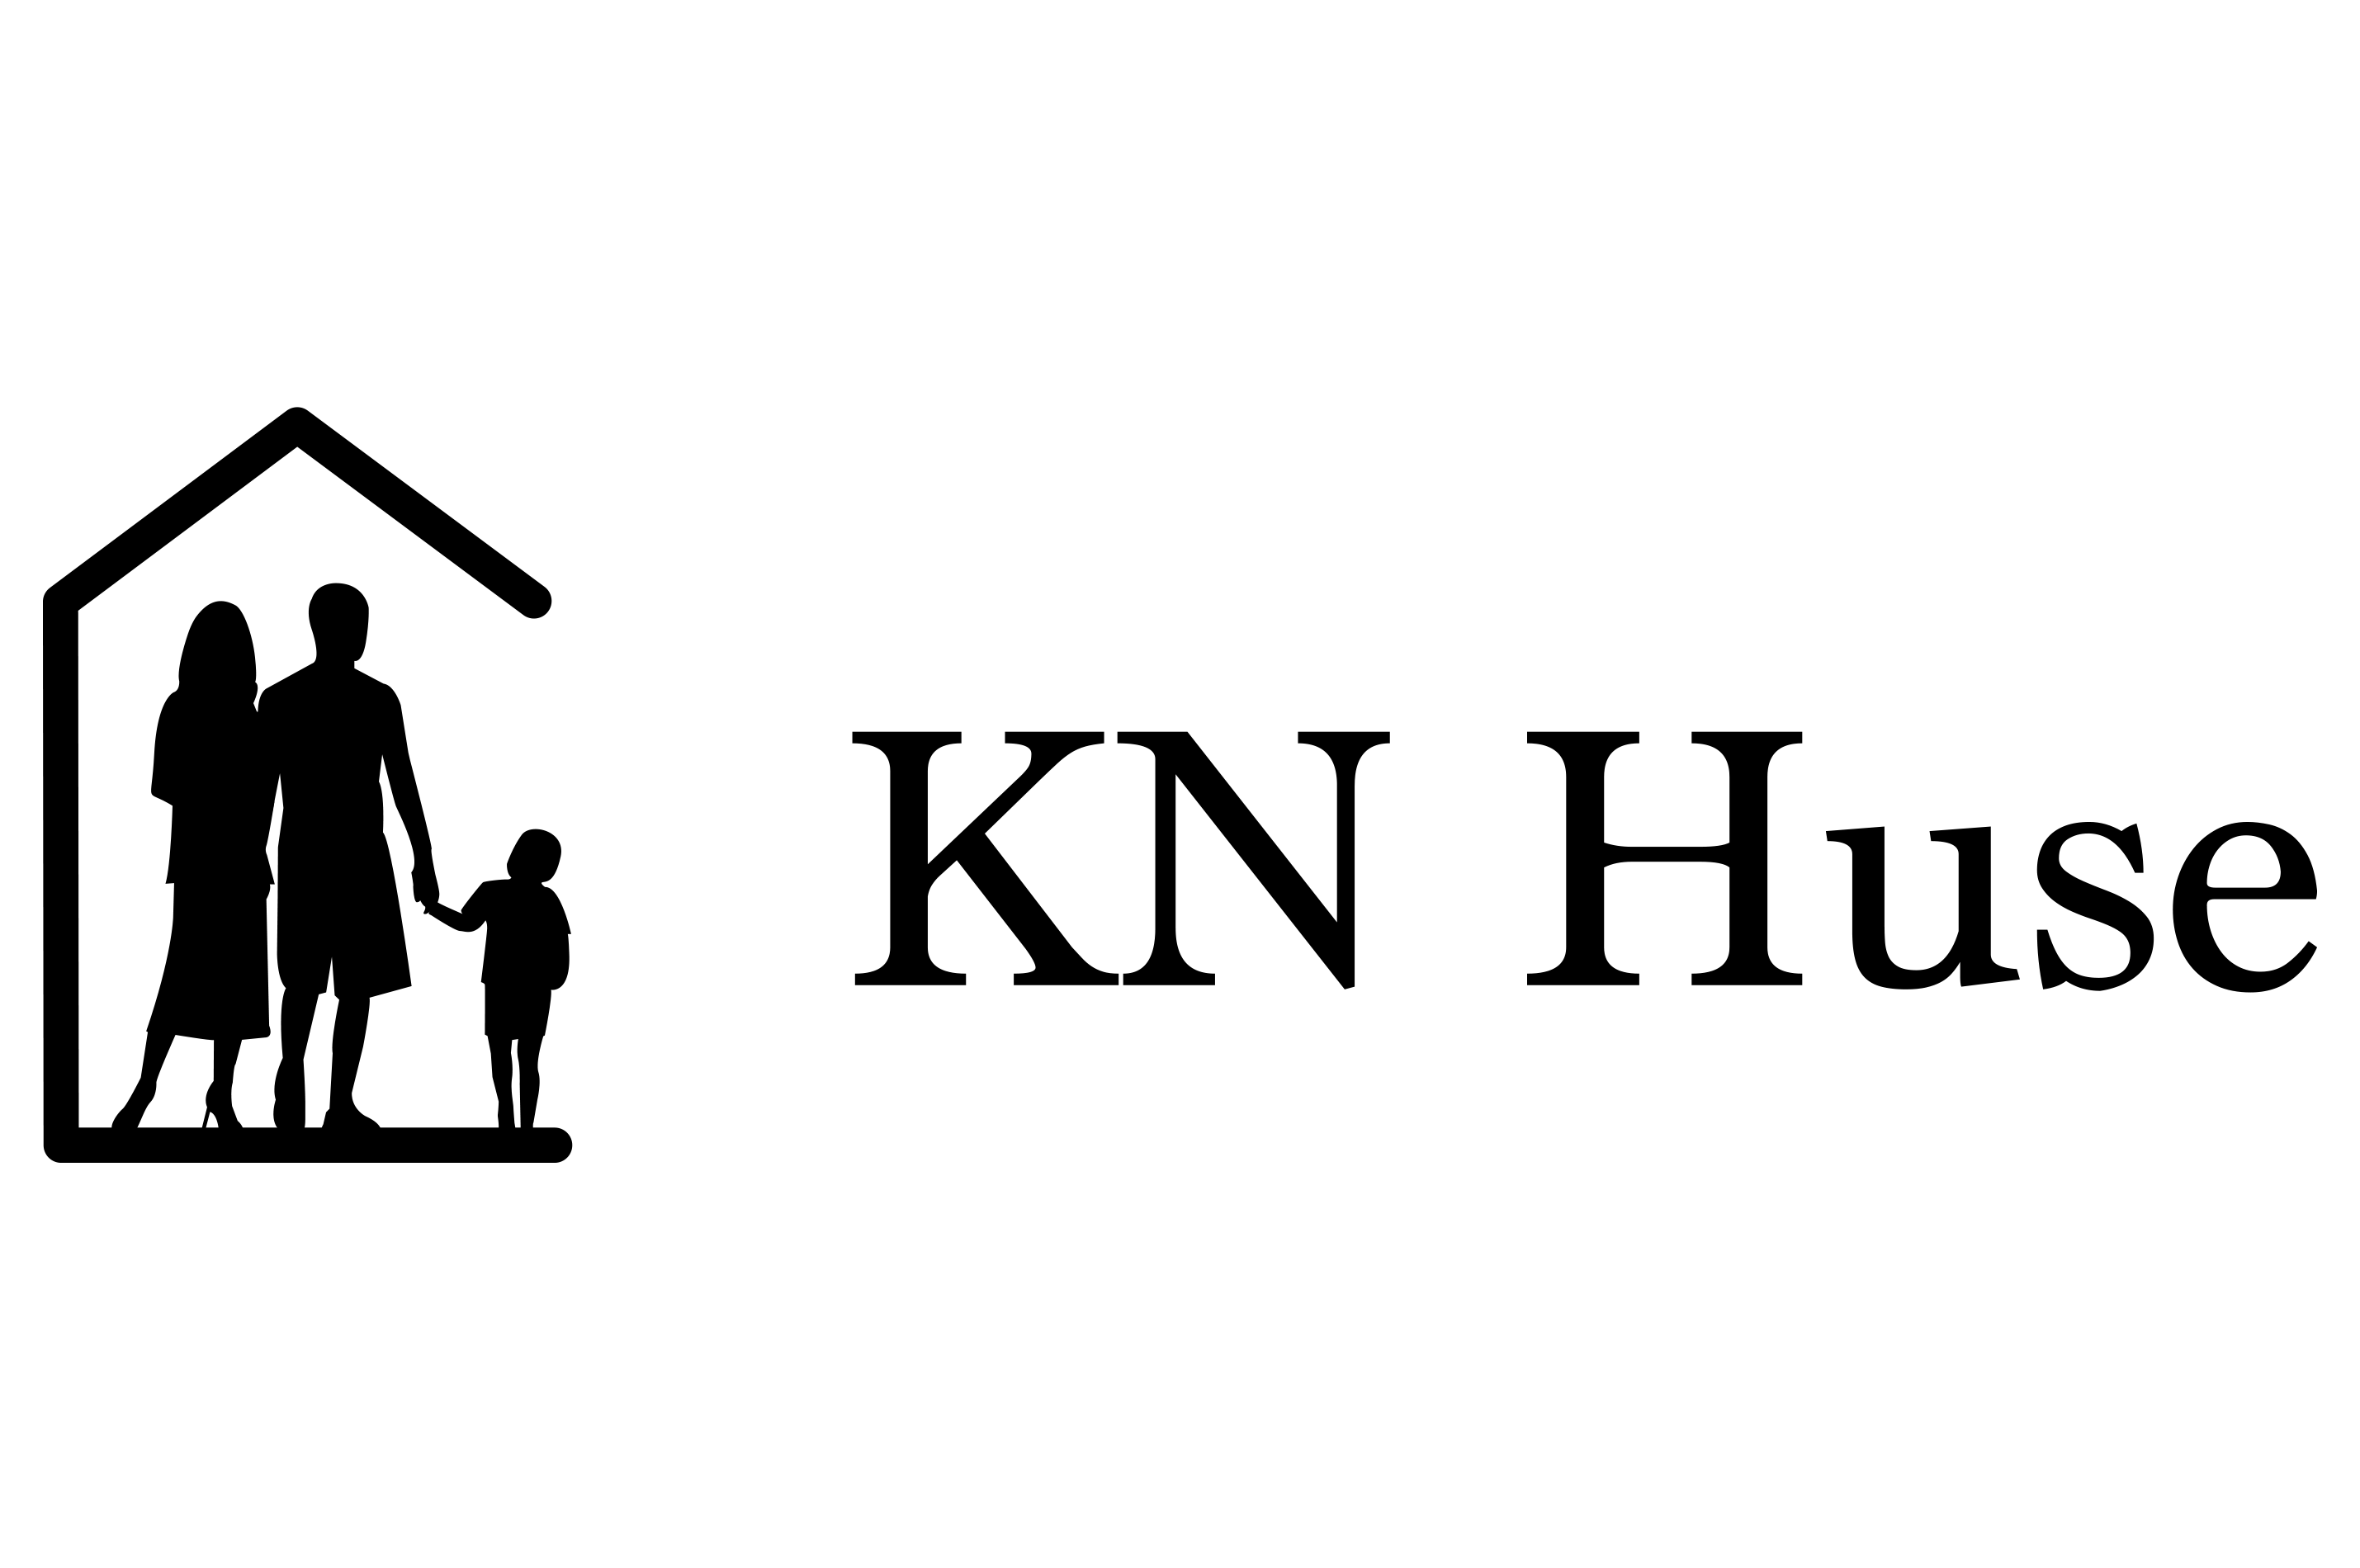 Kn huse - logo